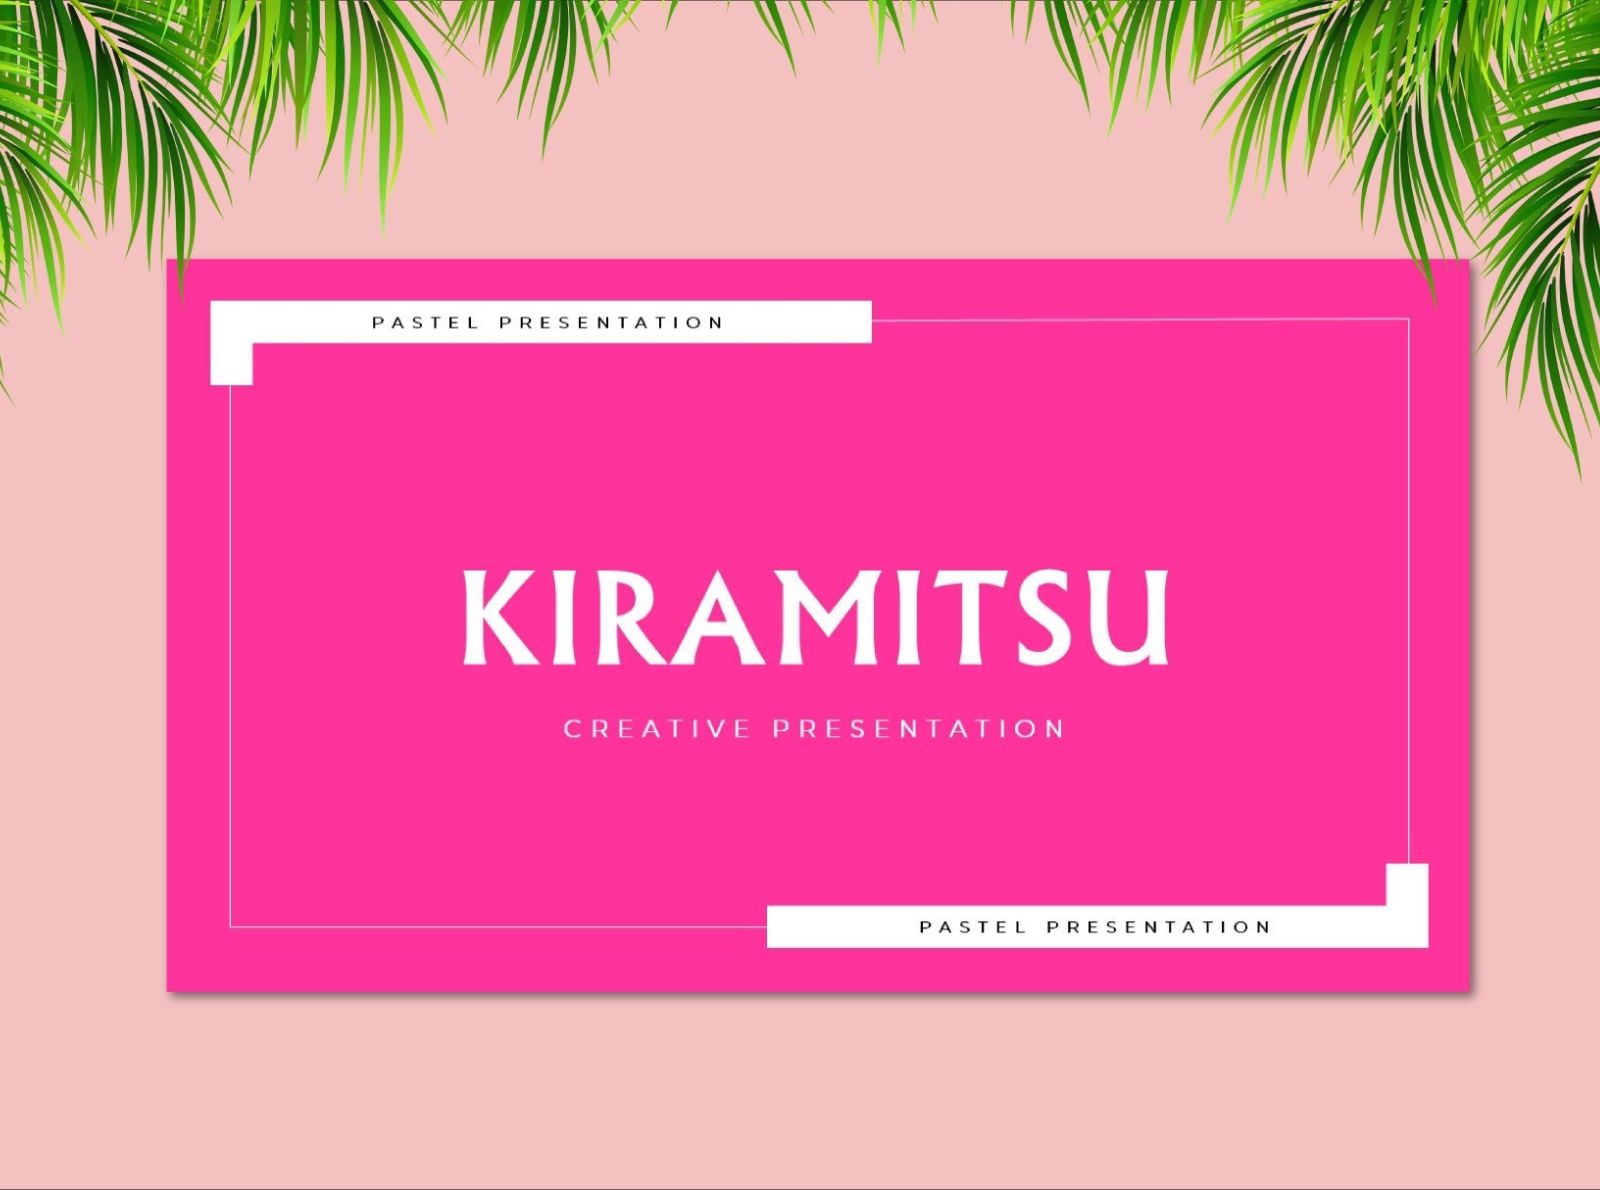 Kiramitsu Pastel Powerpoint By Templates On Dribbble